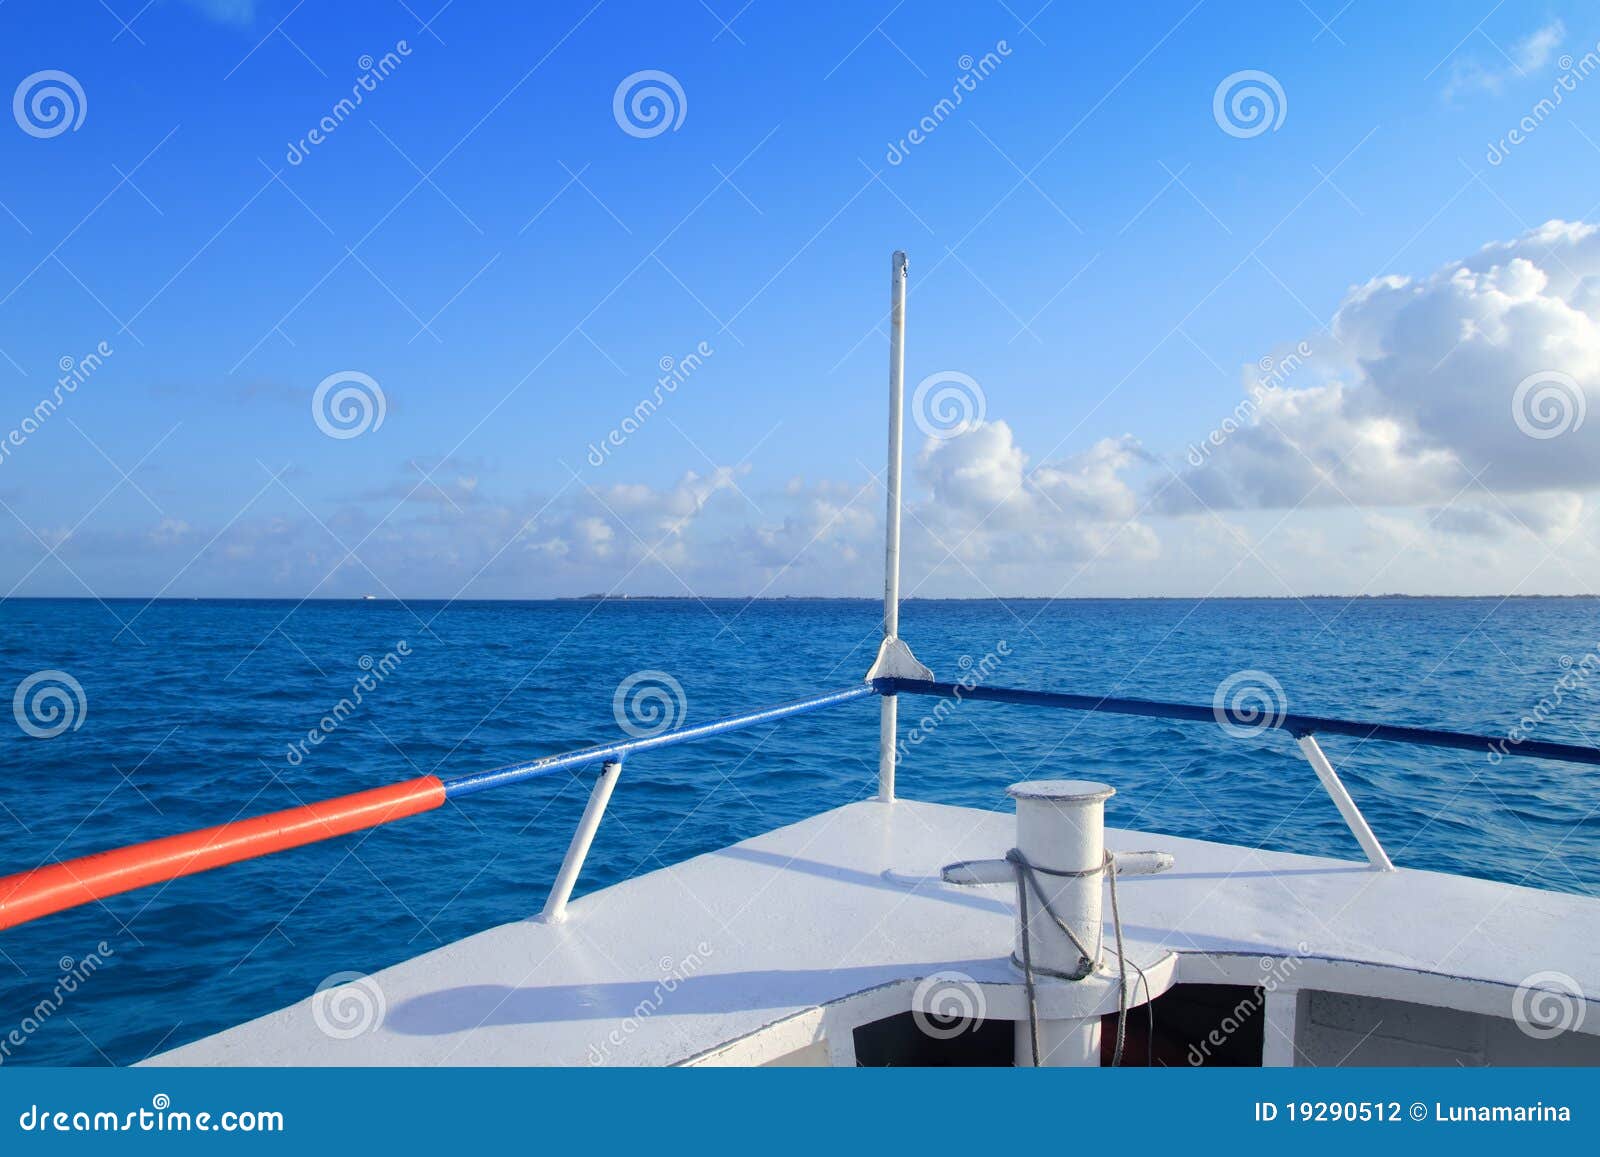 boat bow blue caribbean sea cancun to isla mujeres